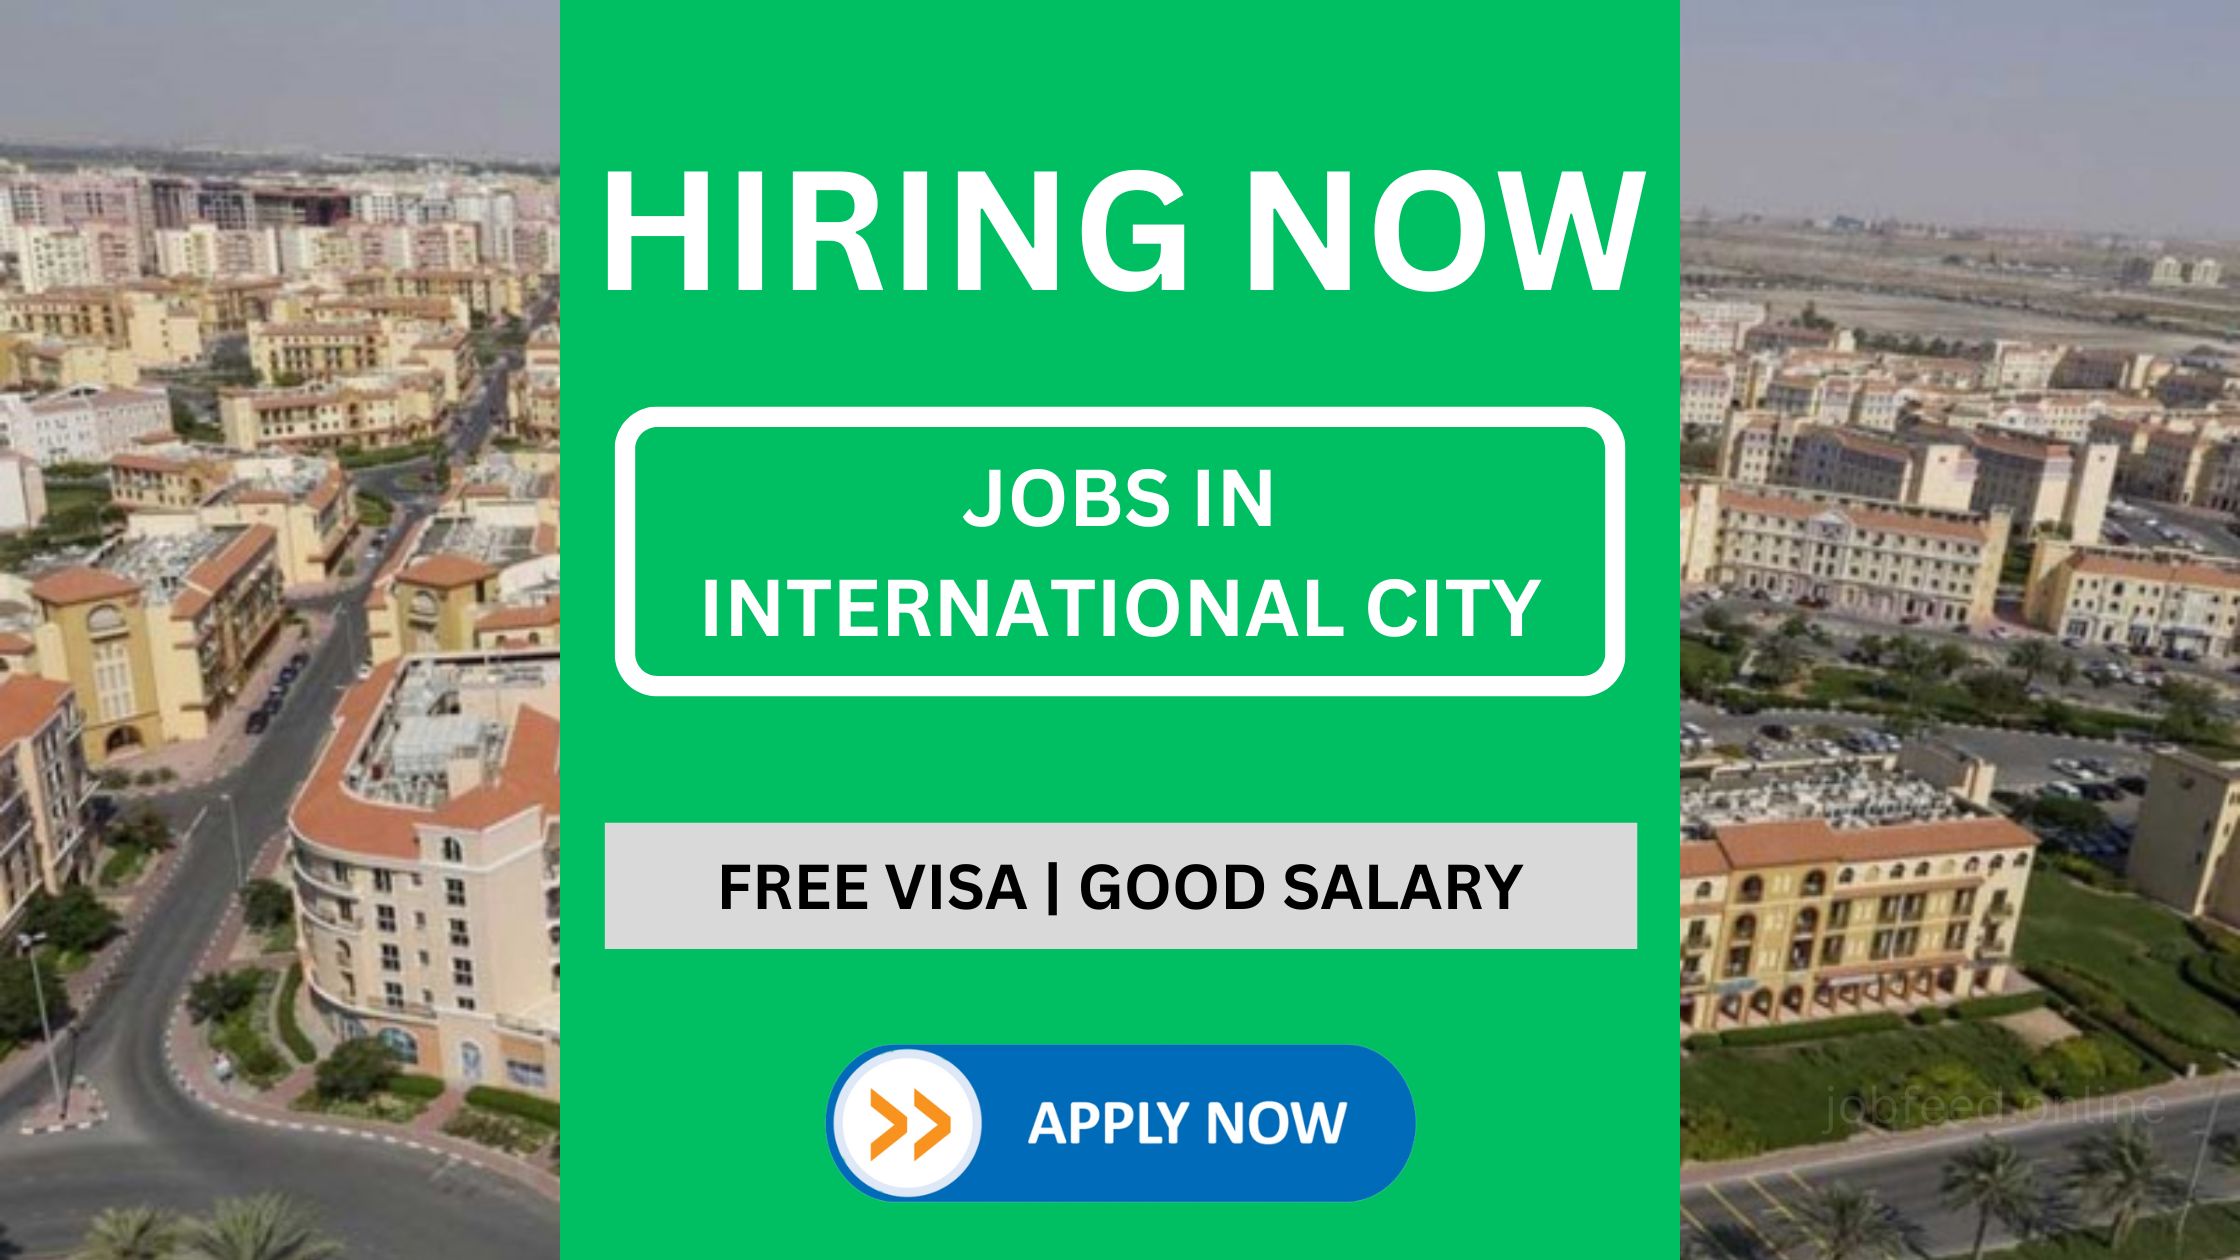 JOBS IN INTERNATIONAL CITY